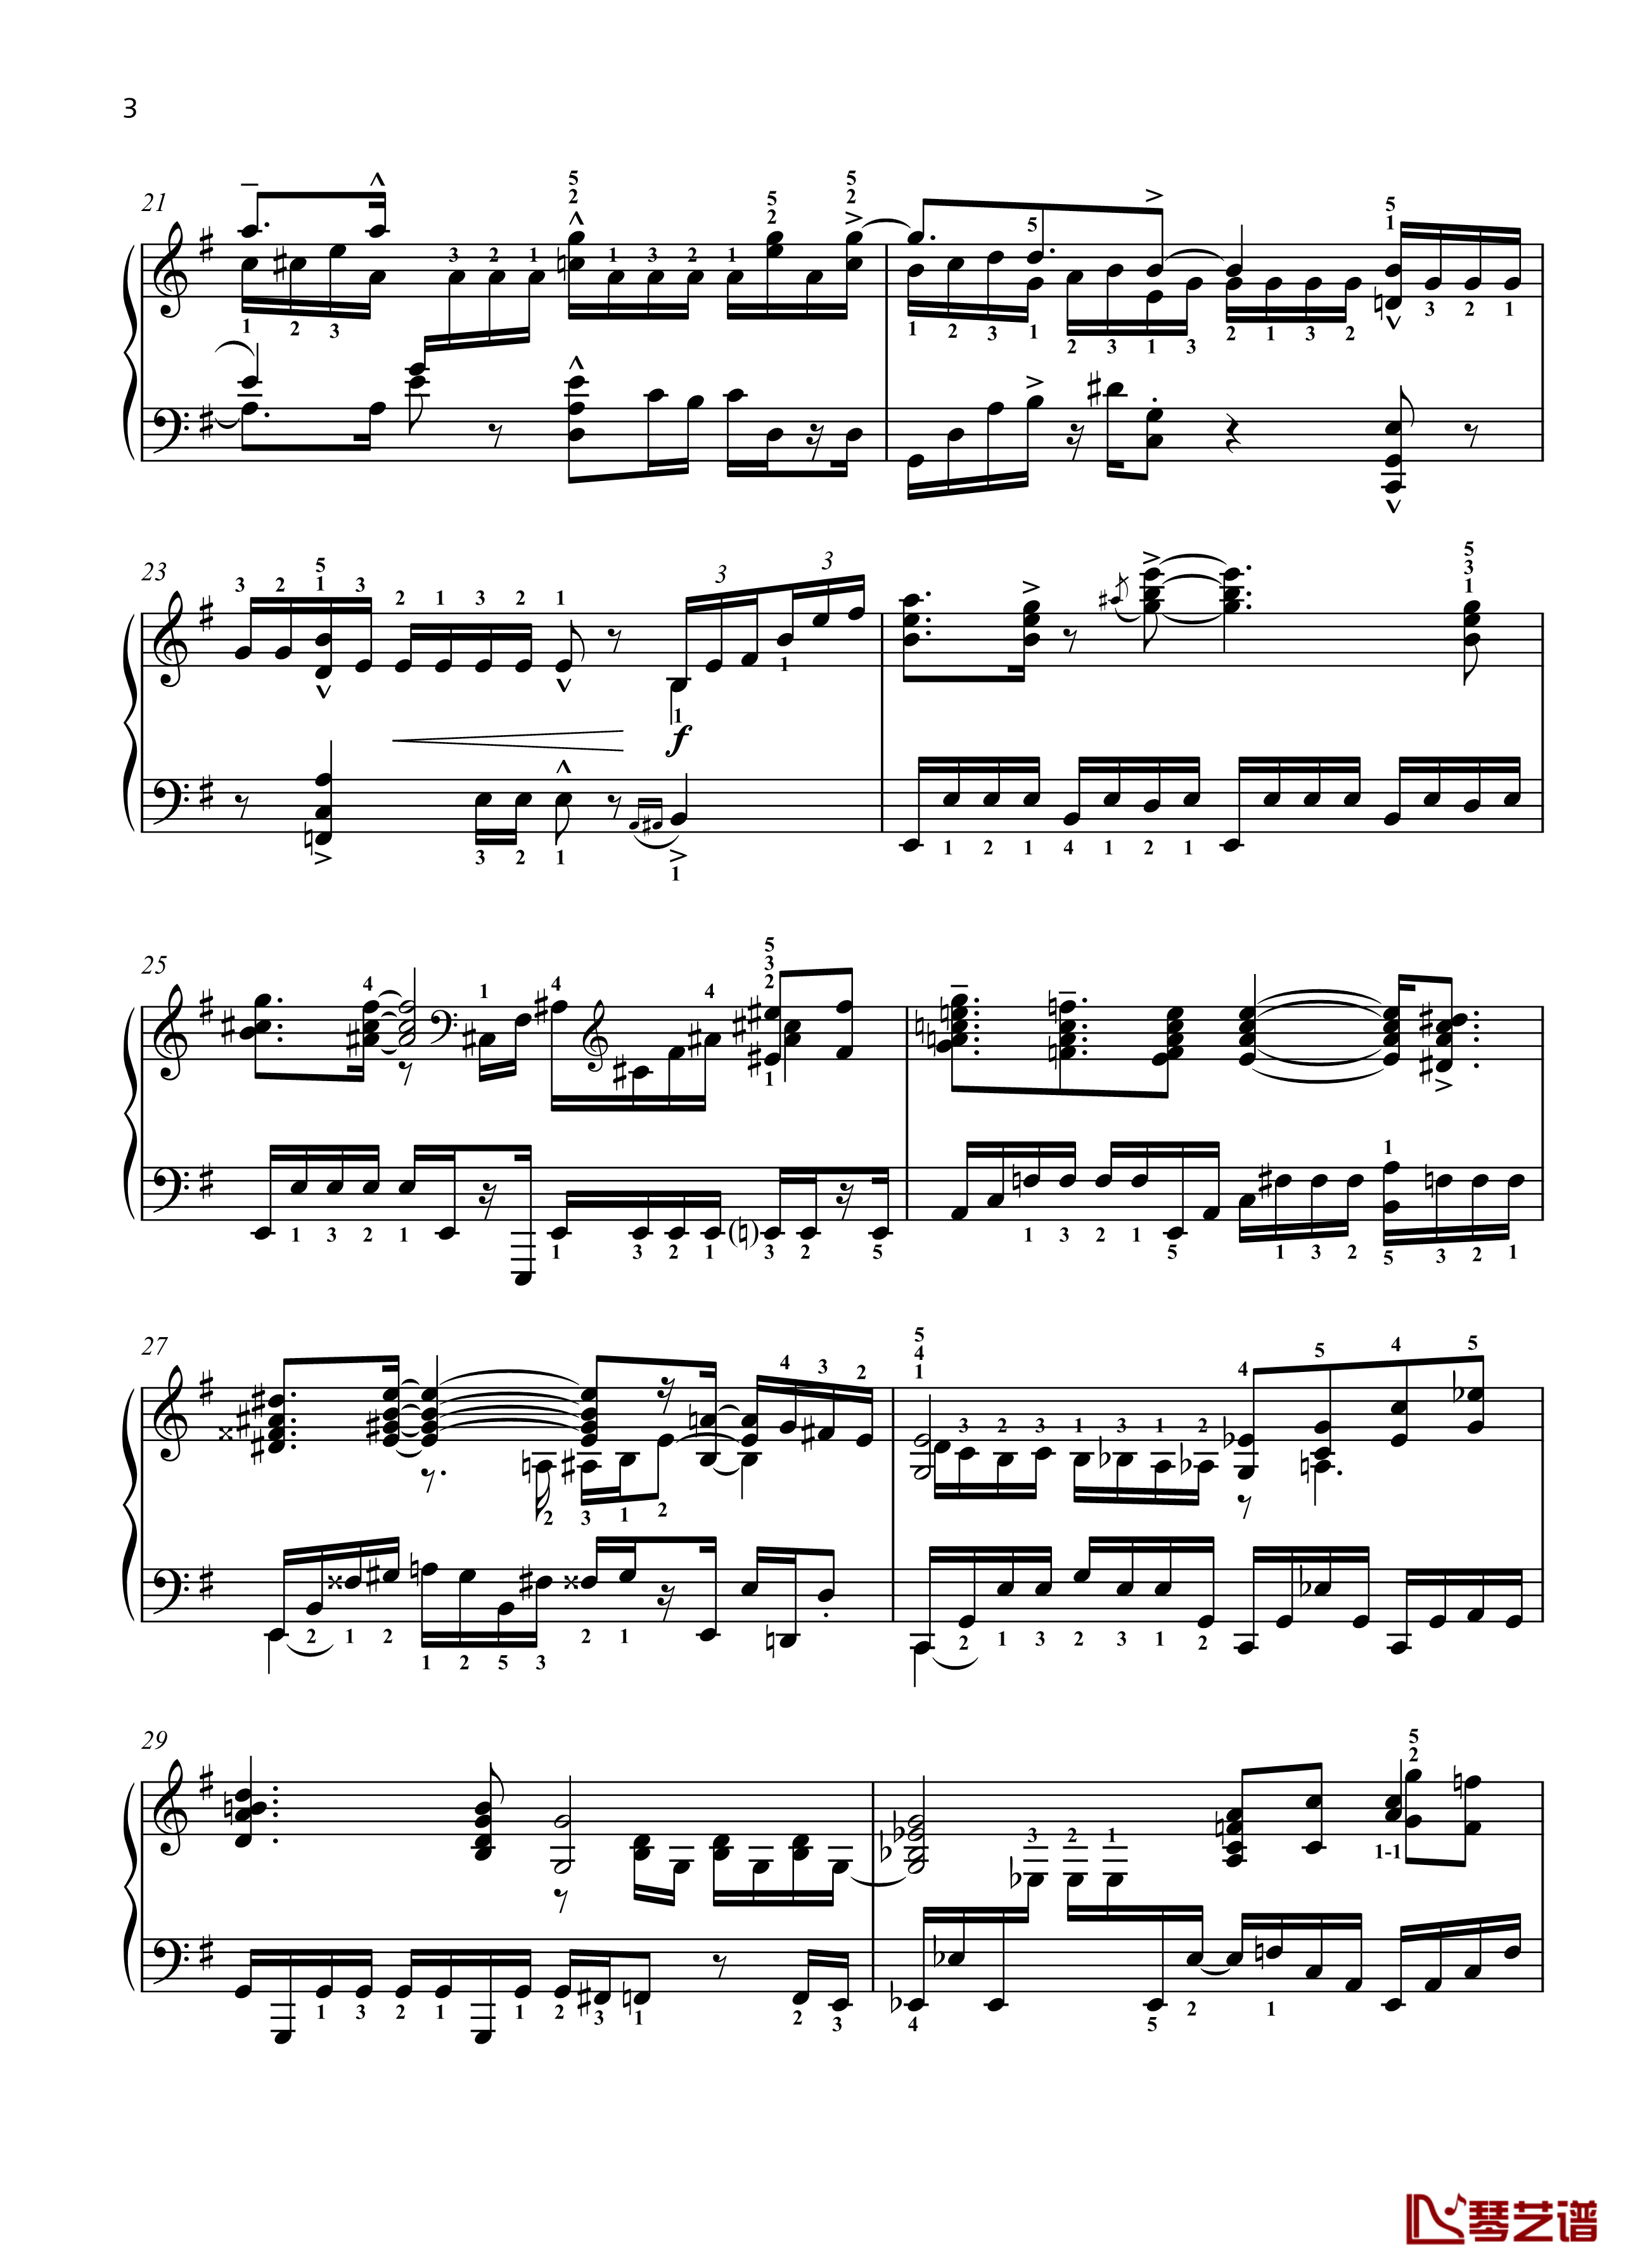 No. 3. Toccatina钢琴谱-带指法-八首音乐会练习曲 Eight Concert ?tudes Op 40-爵士-尼古拉·凯帕斯汀3